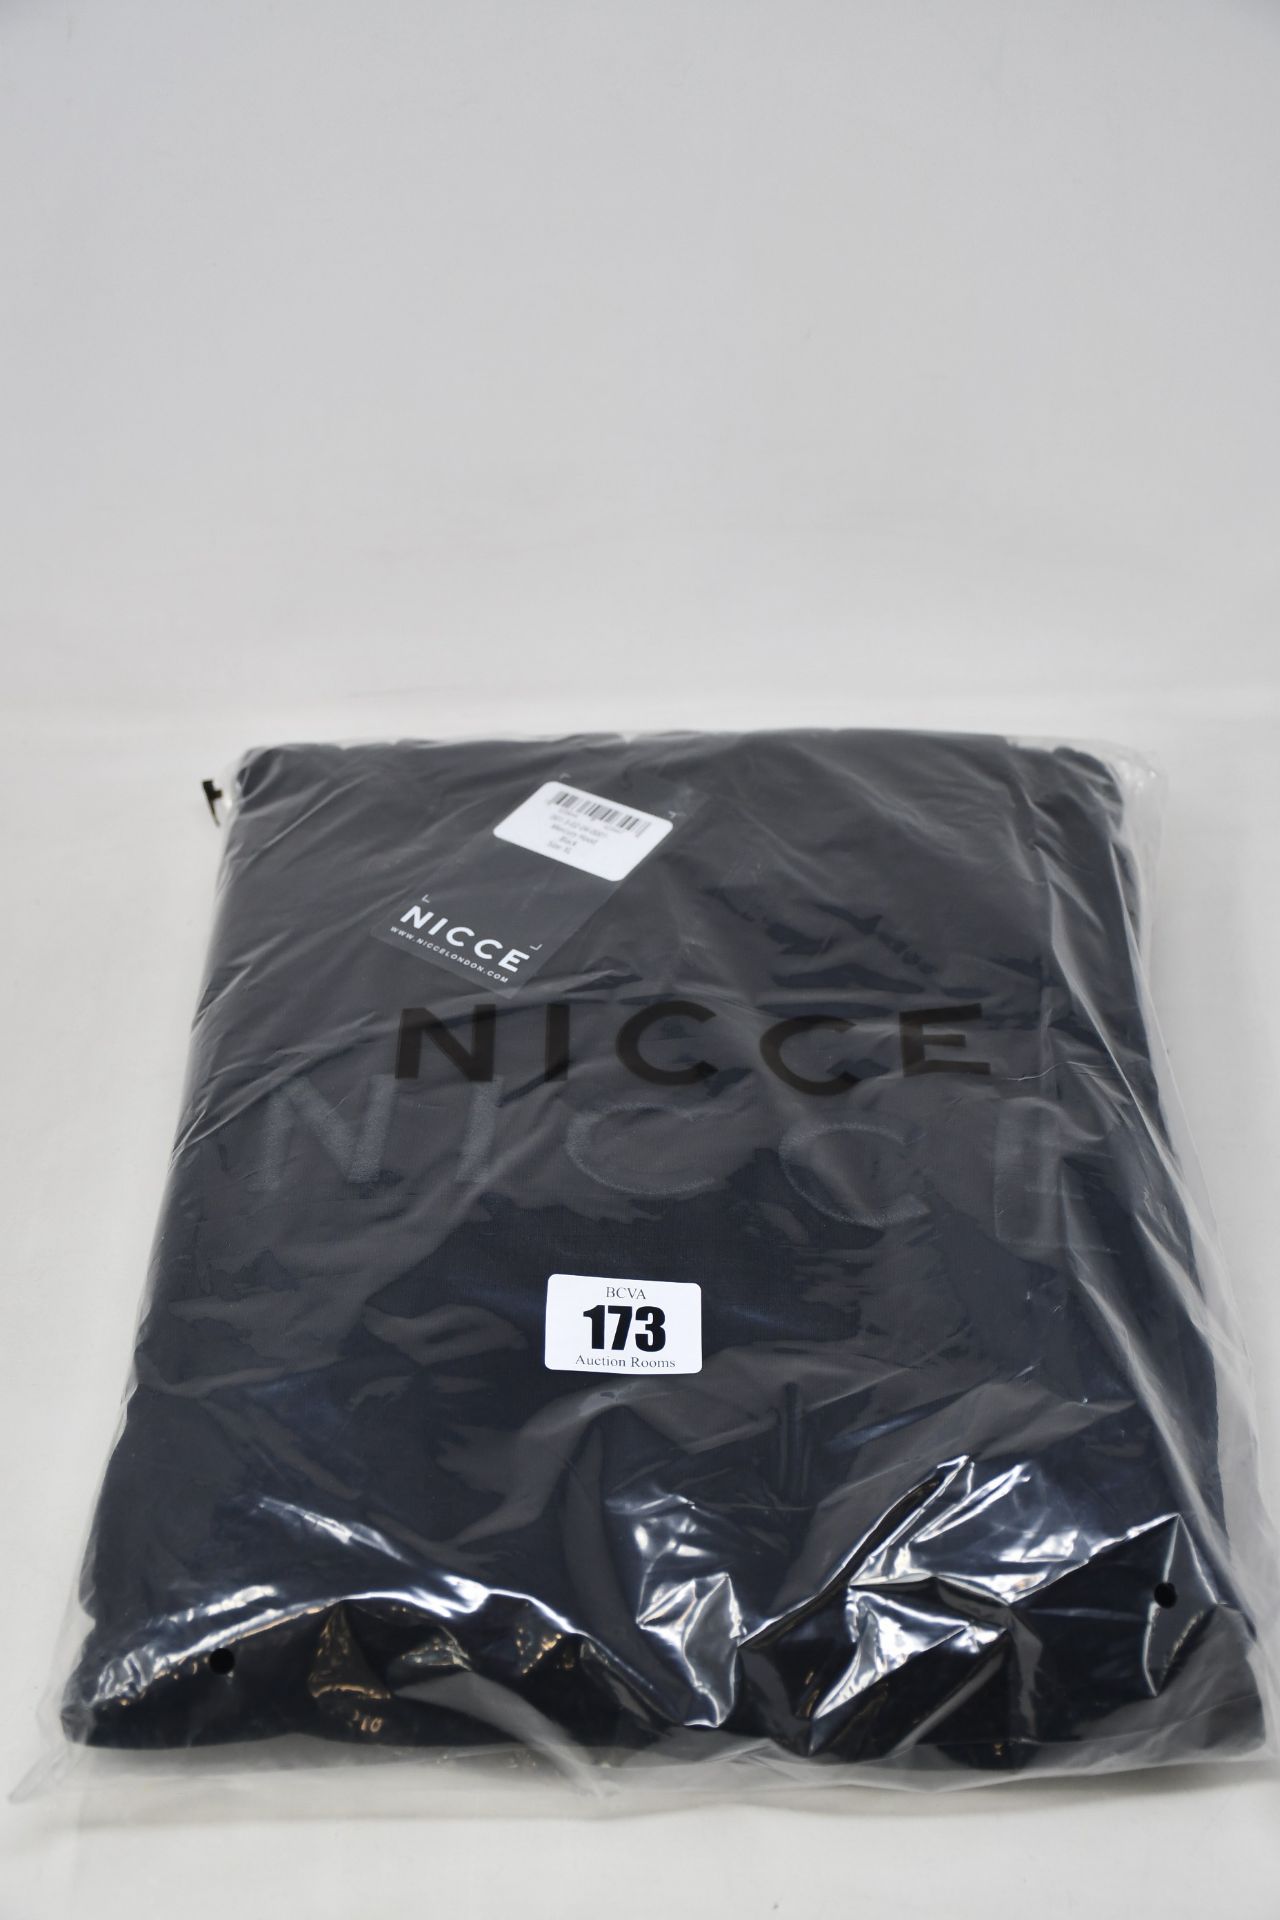 Five as new Nicce Mercury hoodies (2 x M, 2 x L, 1 x XL - RRP £55 each).